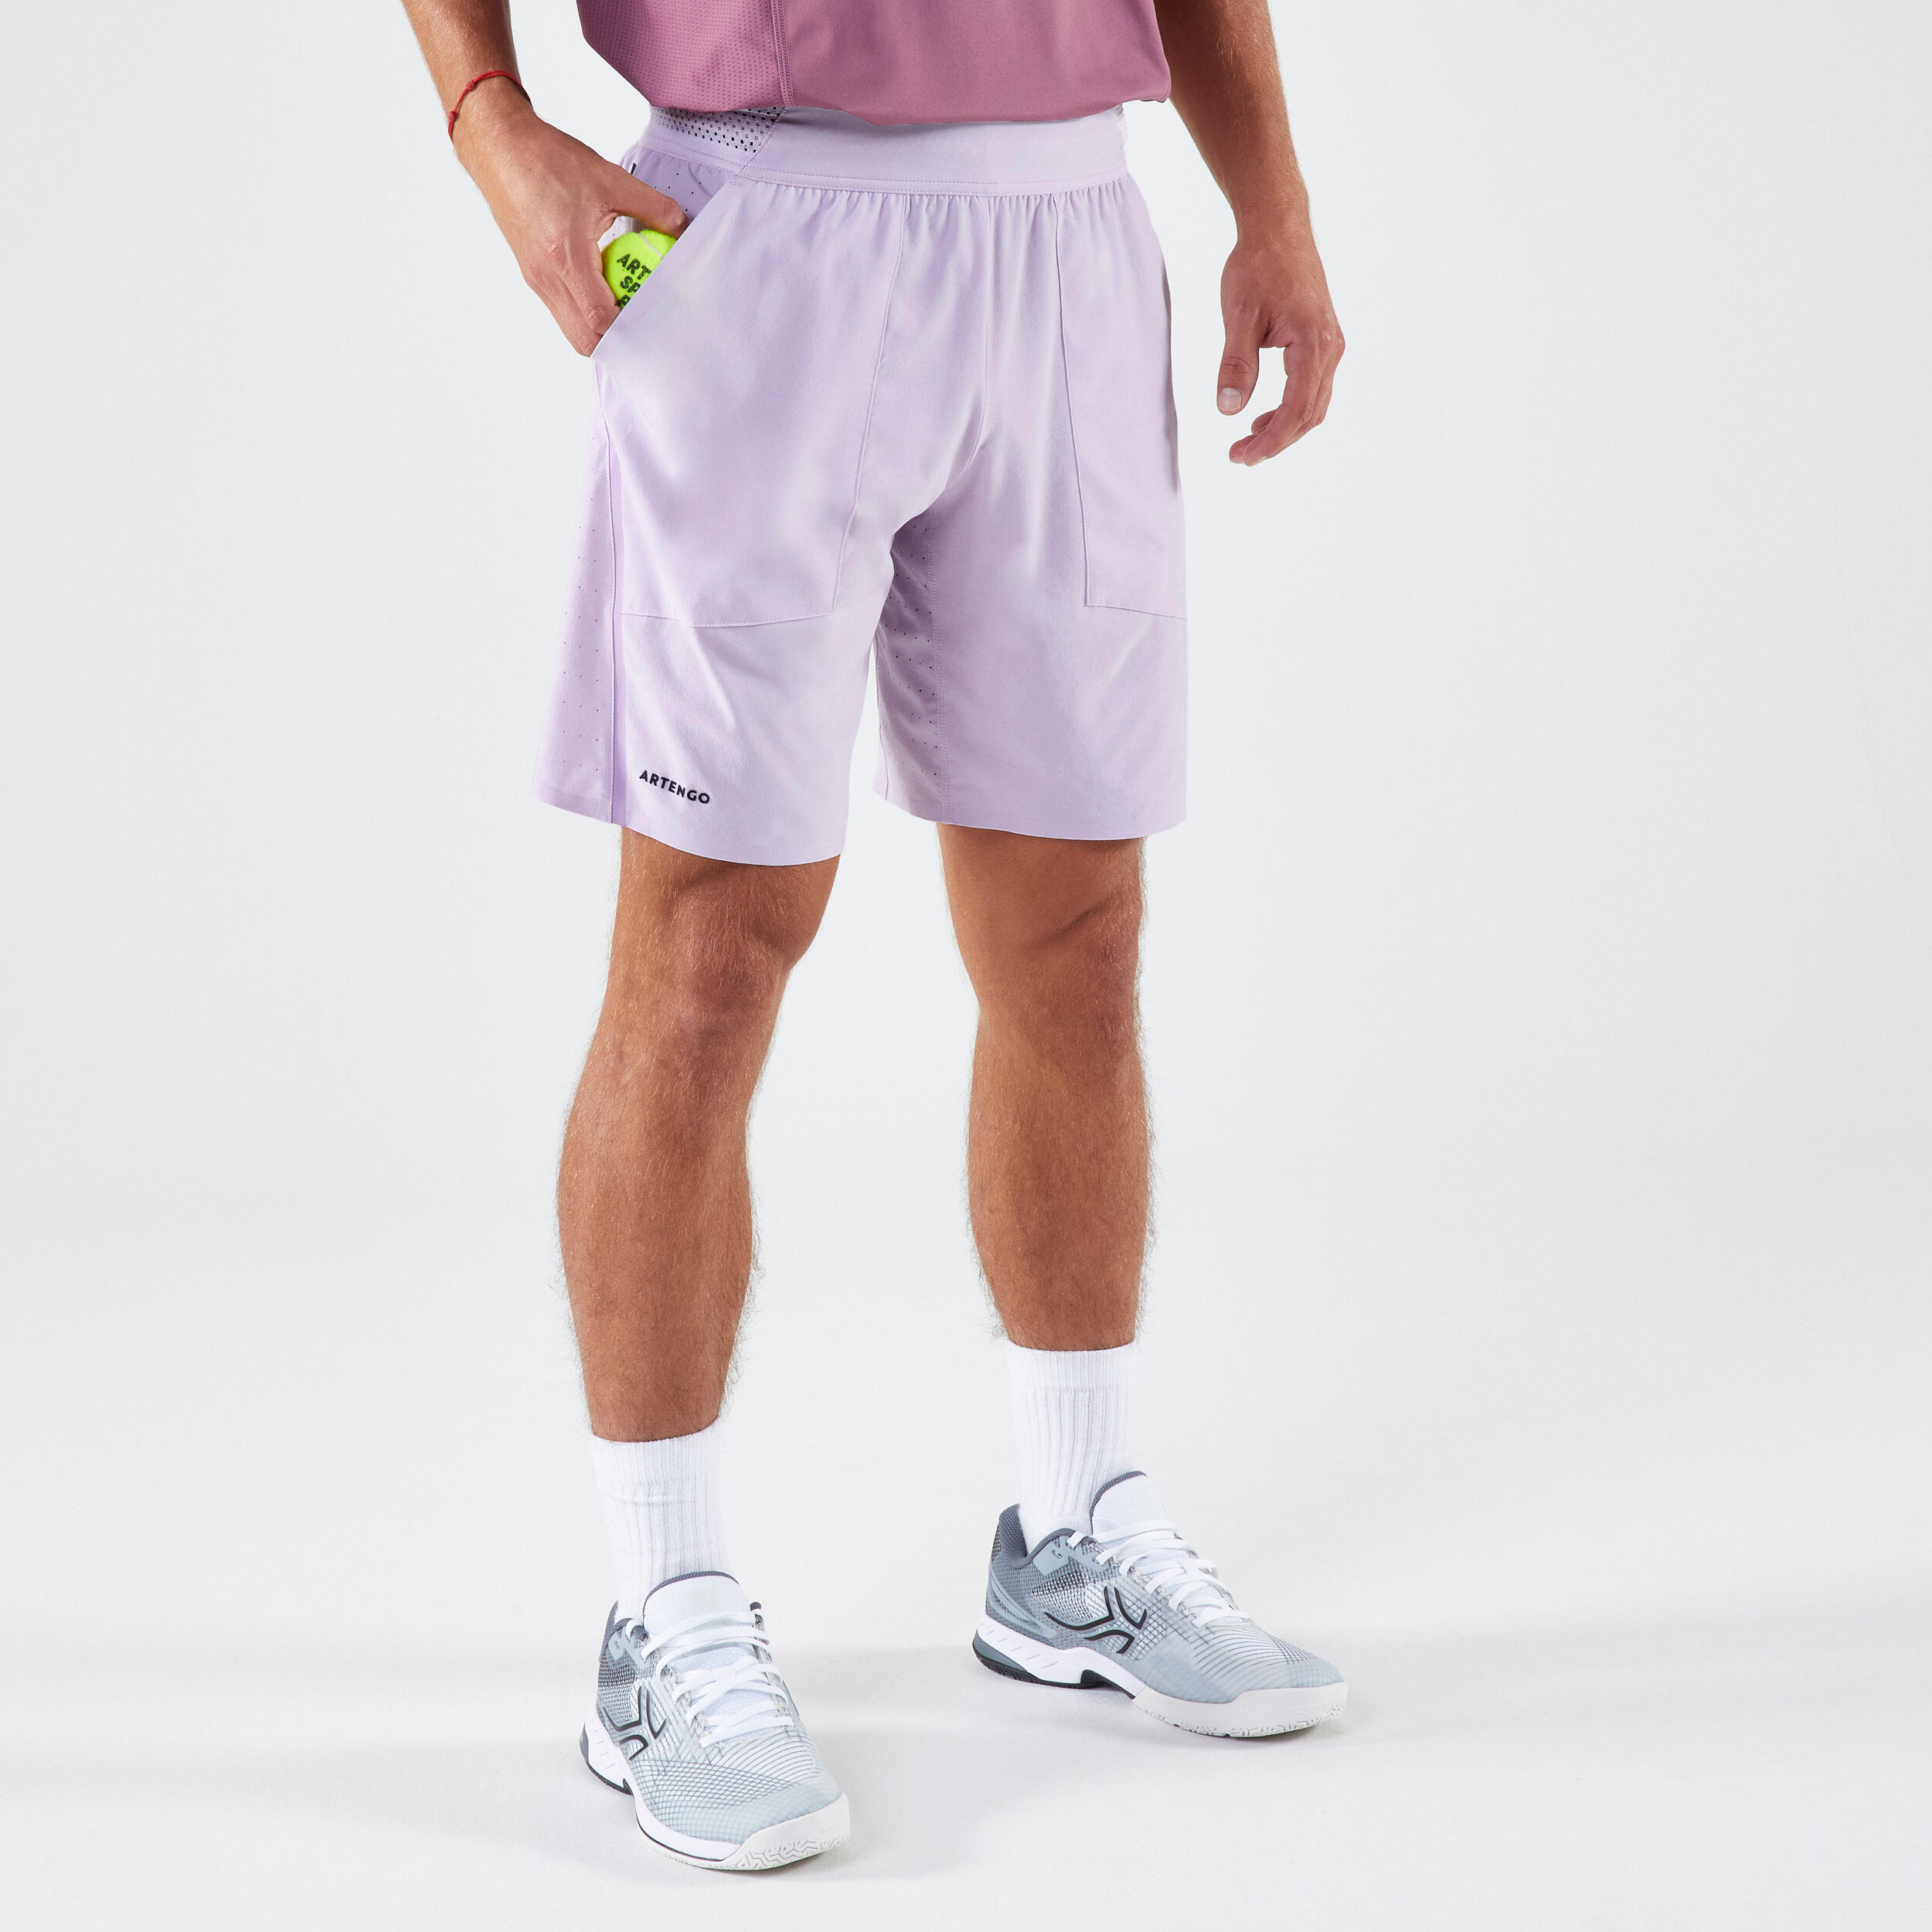 ARTENGO Men's Tennis Shorts Dry+ Gaël Monfils - Purple